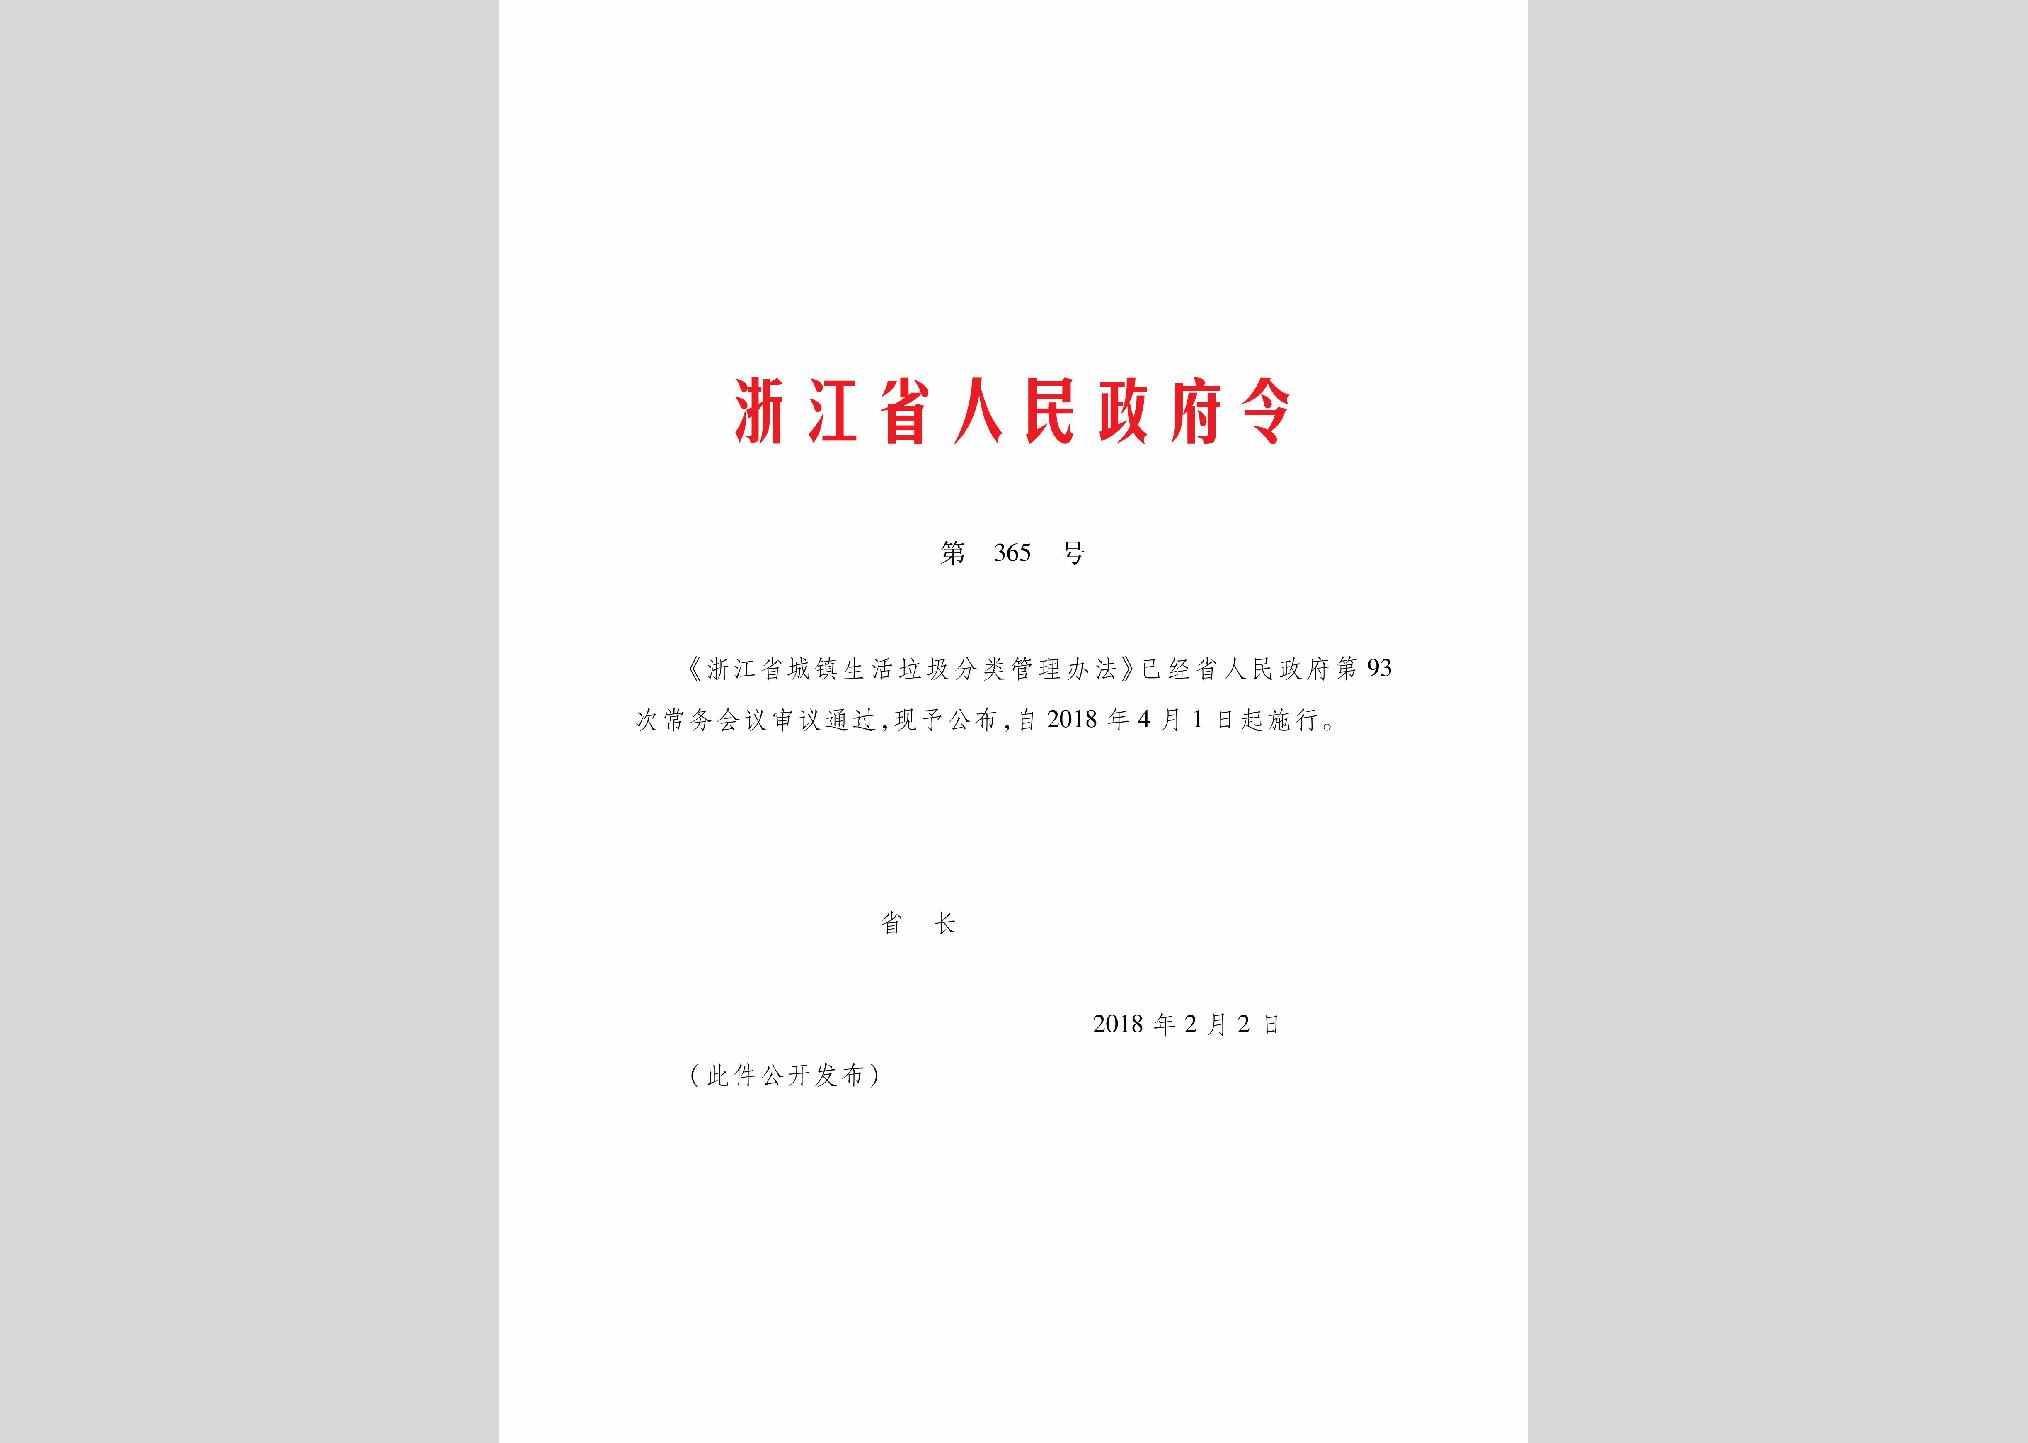 ZJSRMZFL-365-2018：浙江省城镇生活垃圾分类管理办法